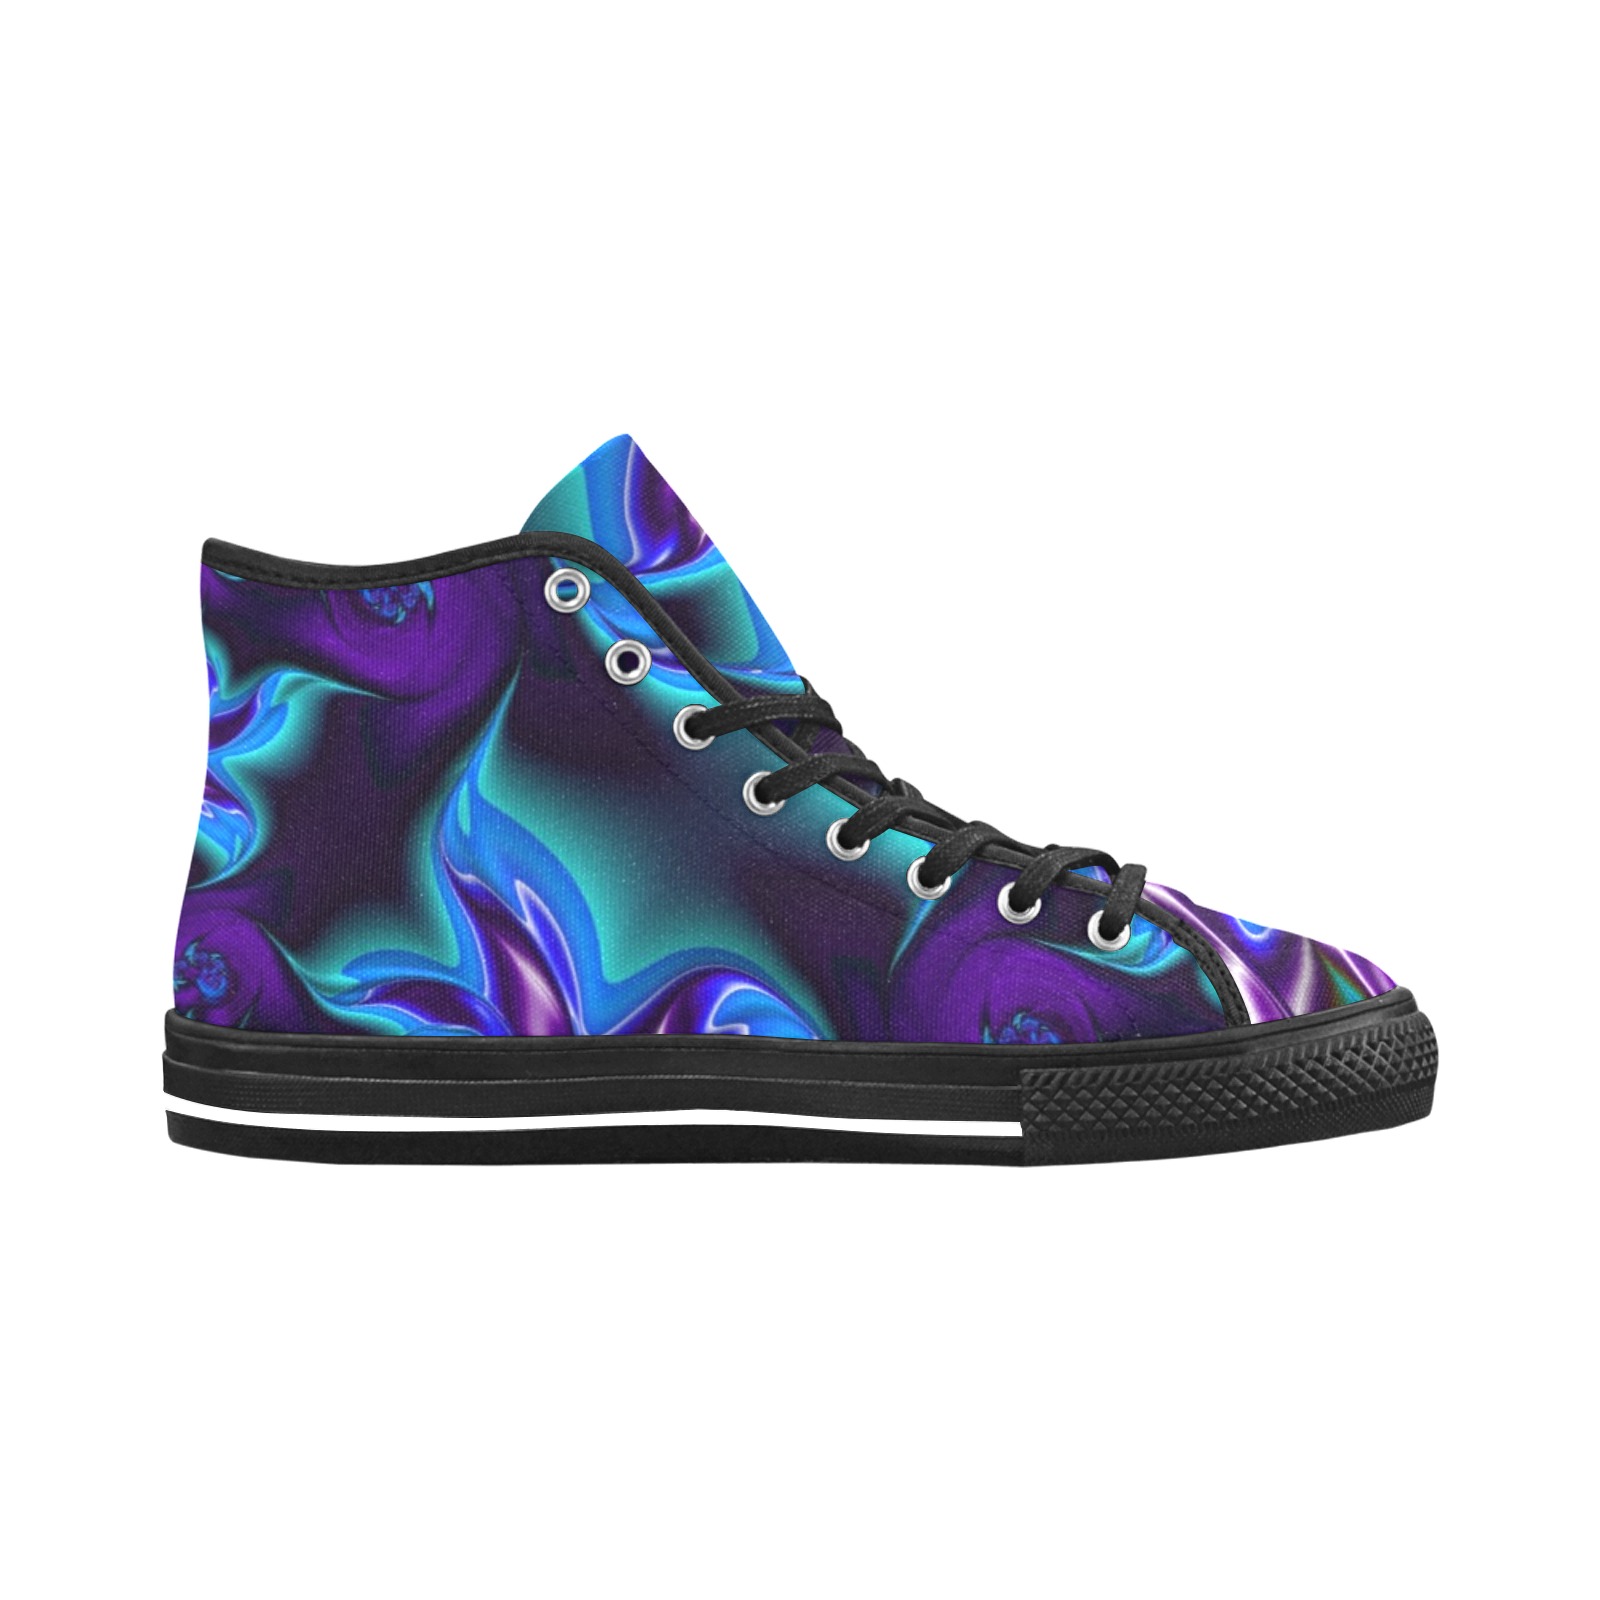 Aqua Blue and Purple Flowers Fractal Abstract Vancouver H Men's Canvas Shoes (1013-1)